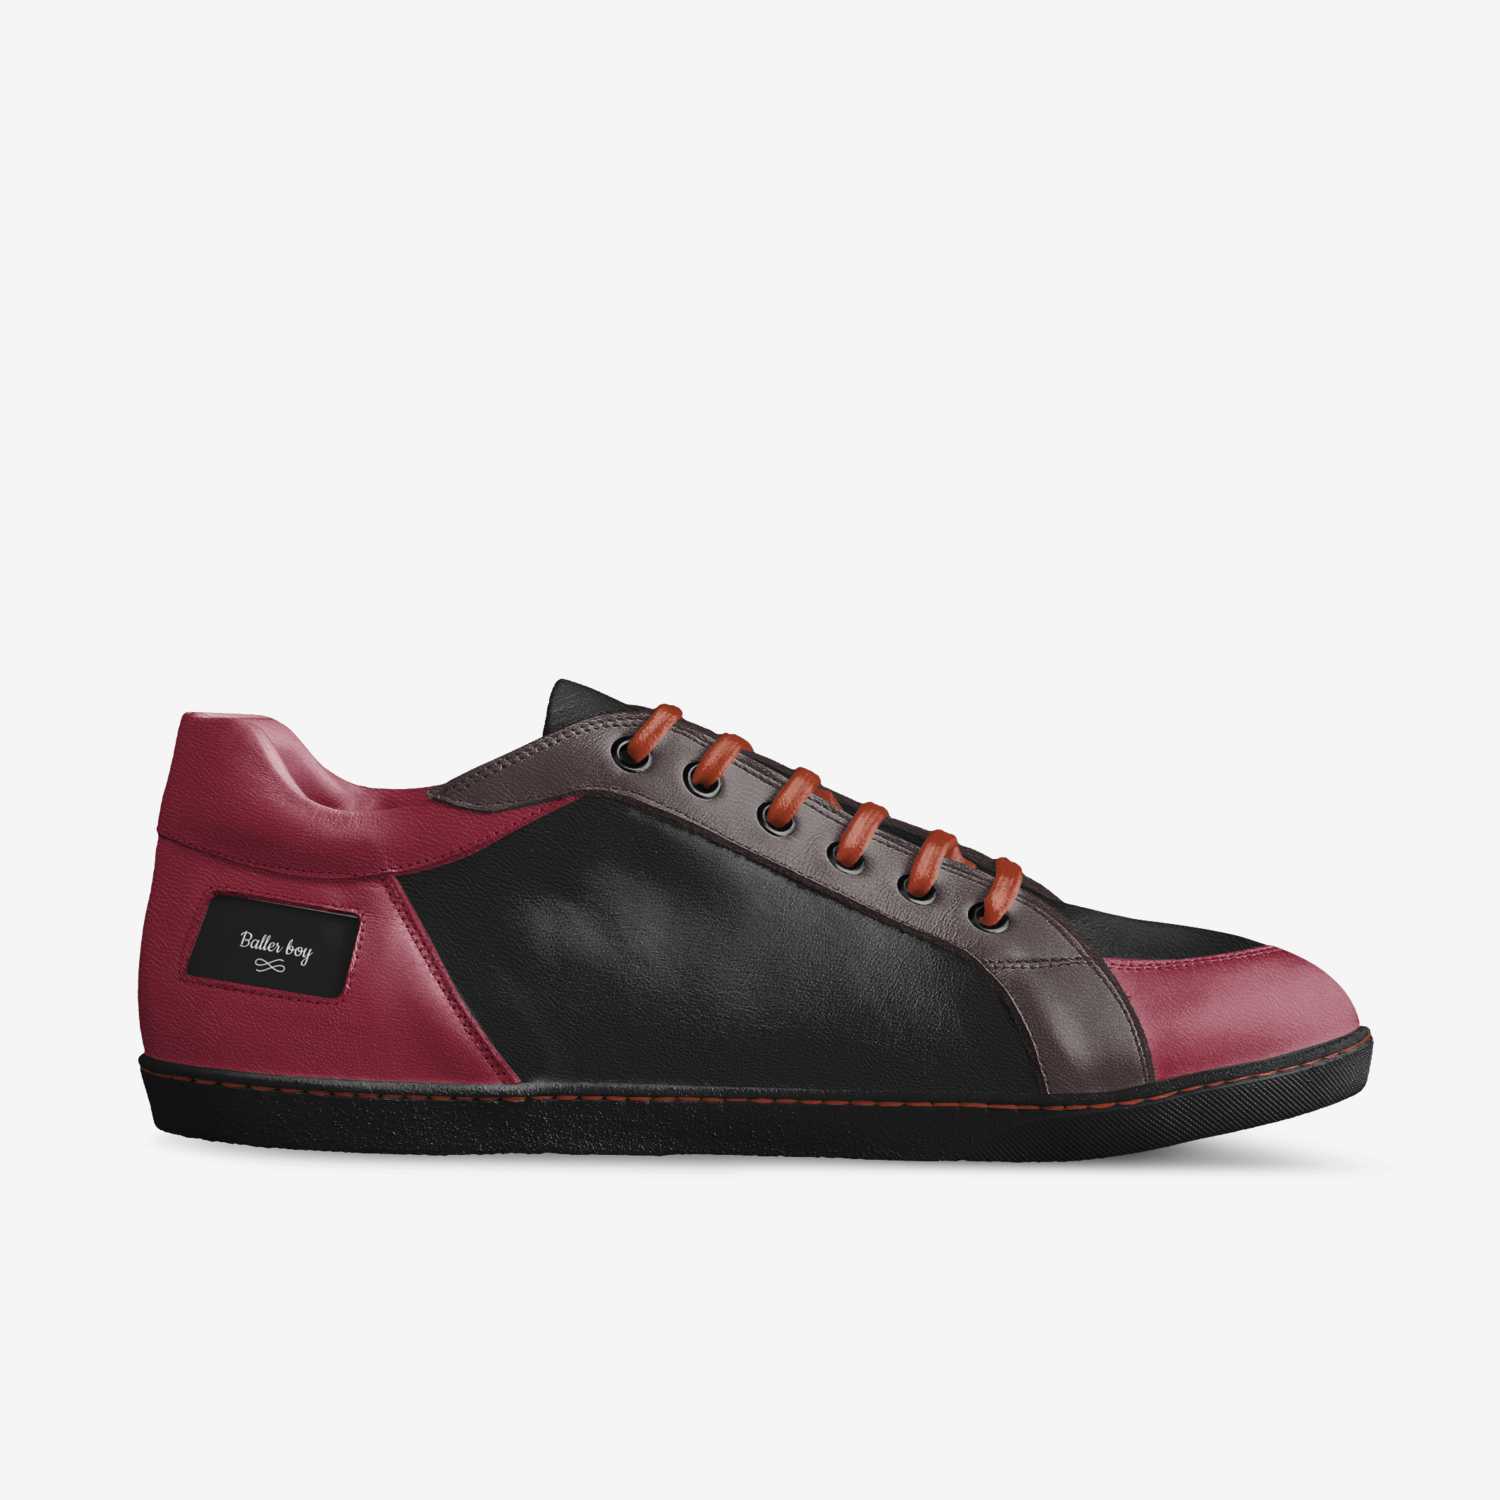 Baller boy custom made in Italy shoes by Jonny Boy | Side view